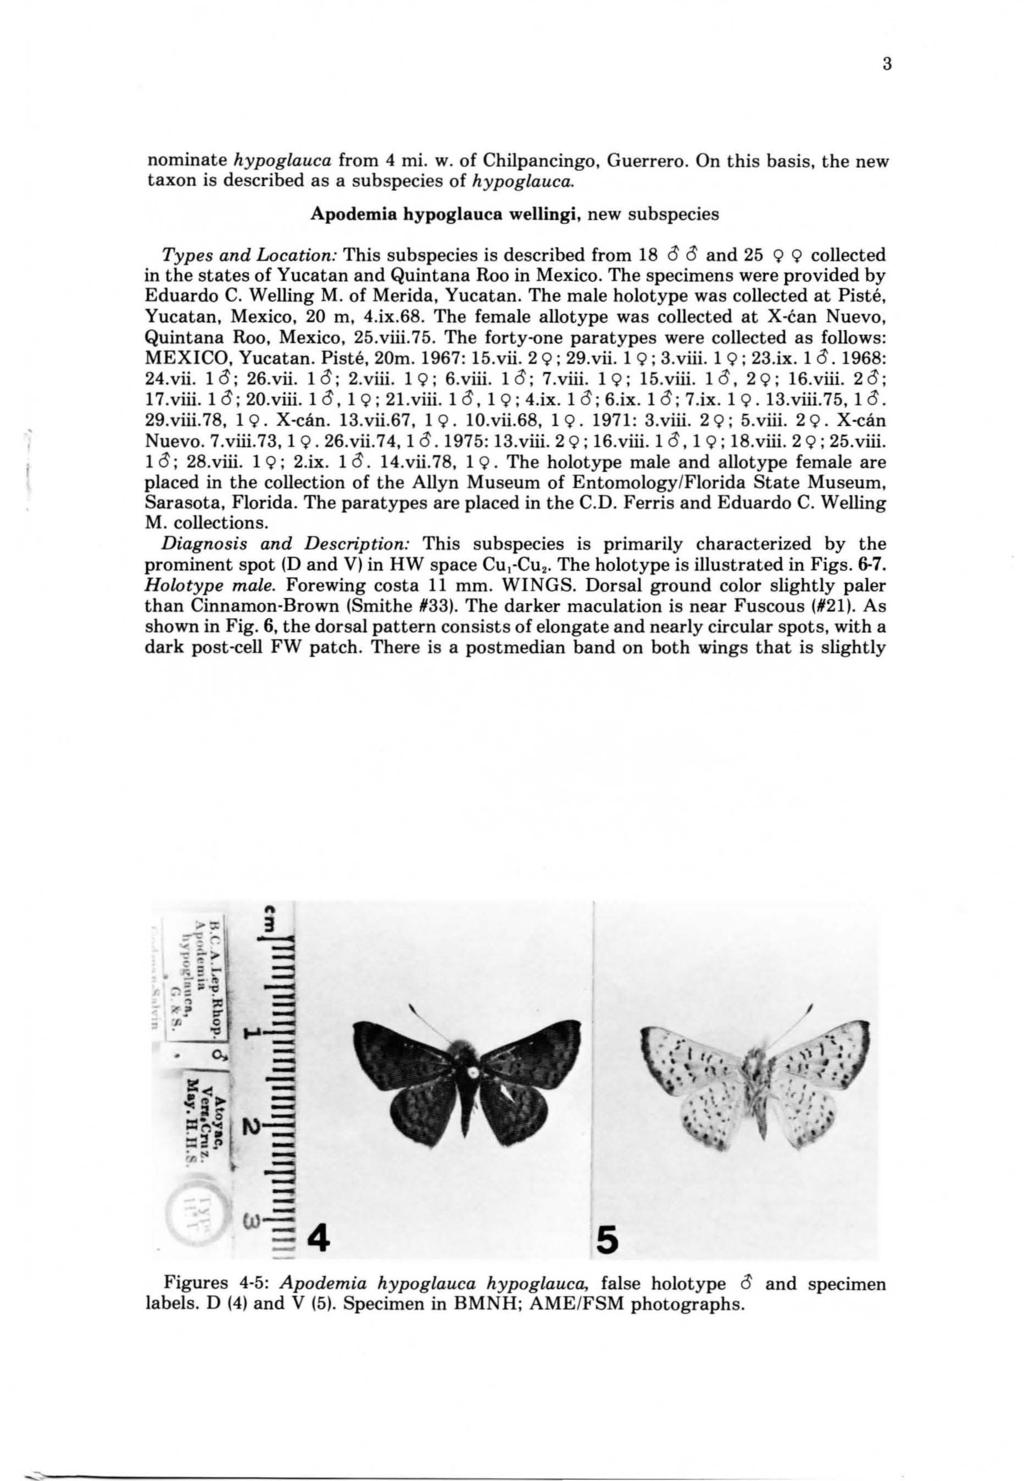 3 nominate hypoglauca from 4 mi. w. of Chilpancingo, Guerrero. On this basis, the new taxon is described as a subspecies of hypoglauca.